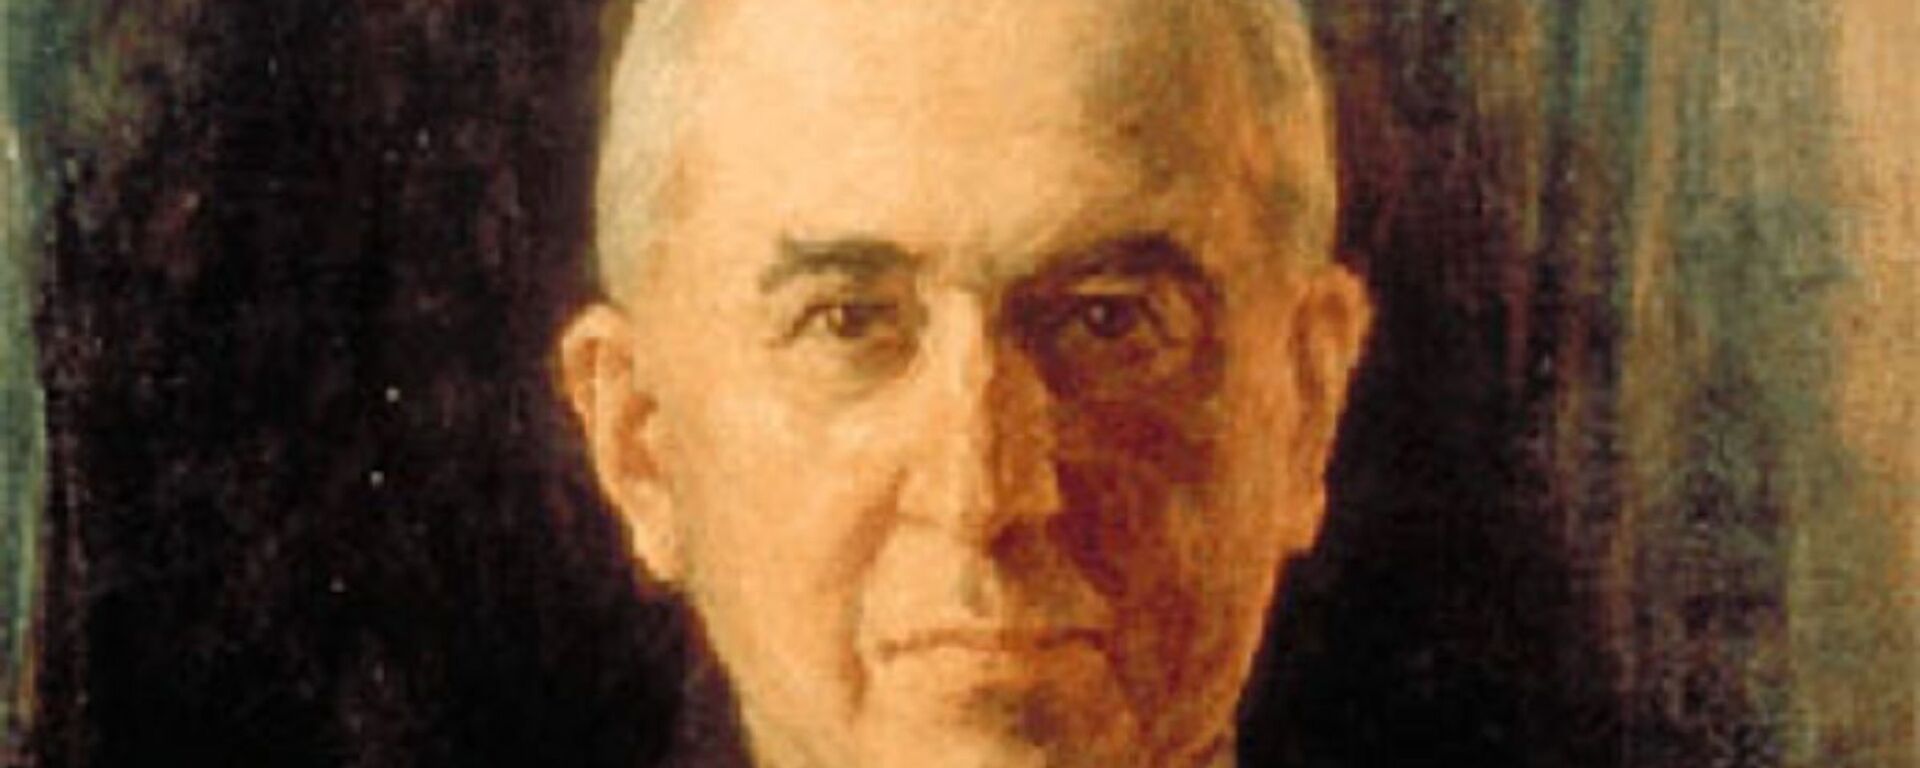 Srpski naučnik Milutin Milanković - Sputnik Srbija, 1920, 17.06.2020